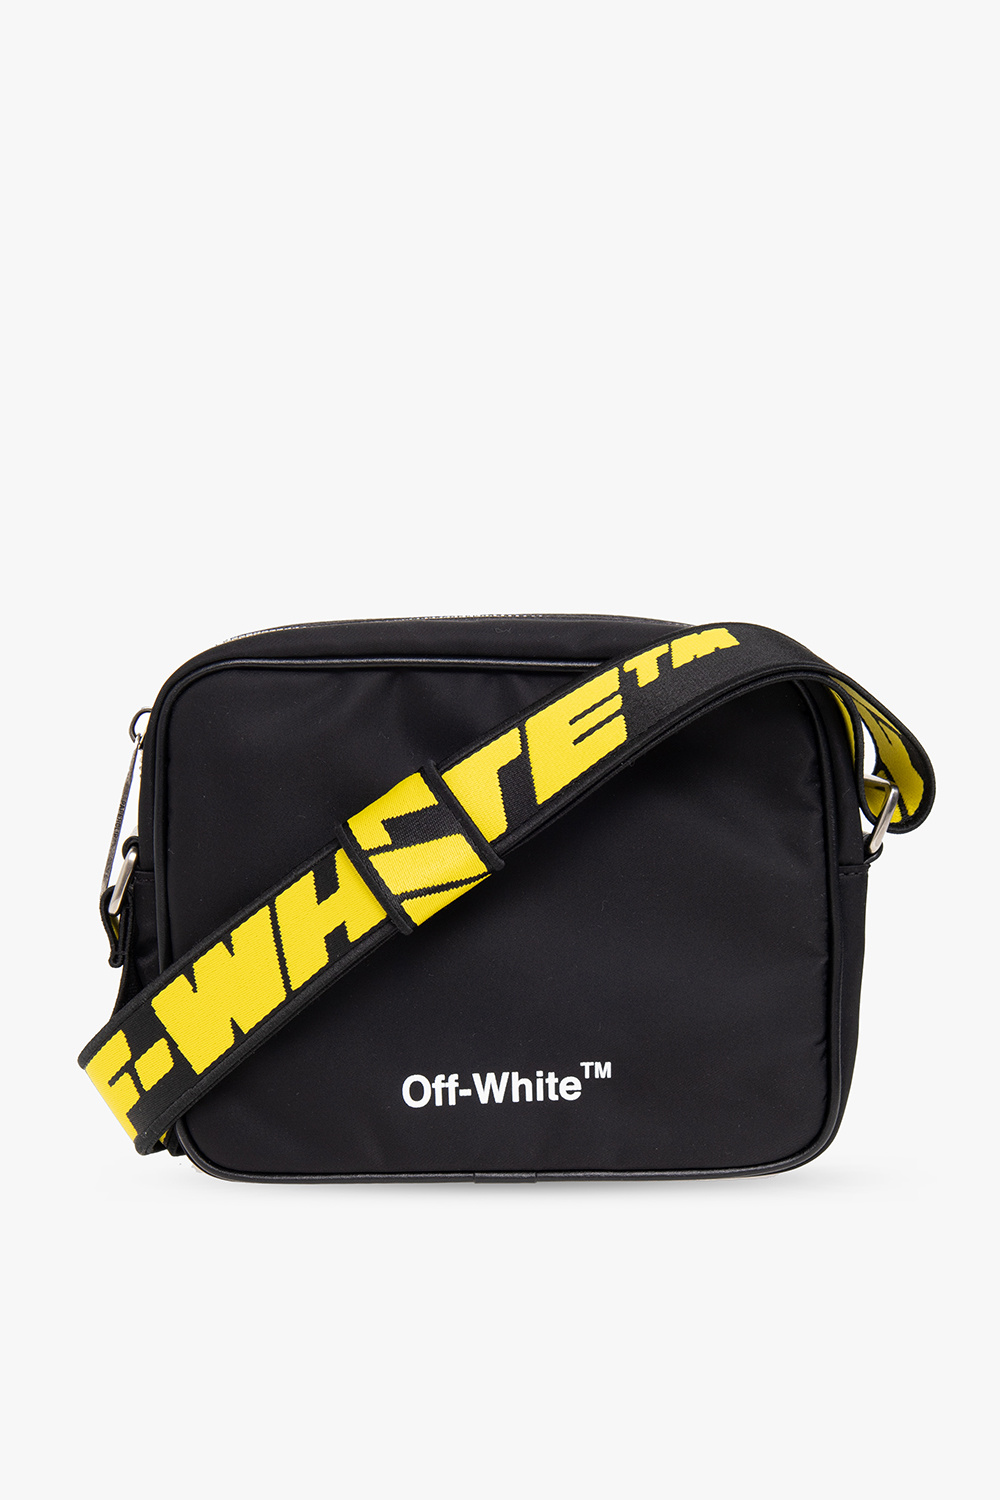 Off-White belt bag alexander mcqueen bag